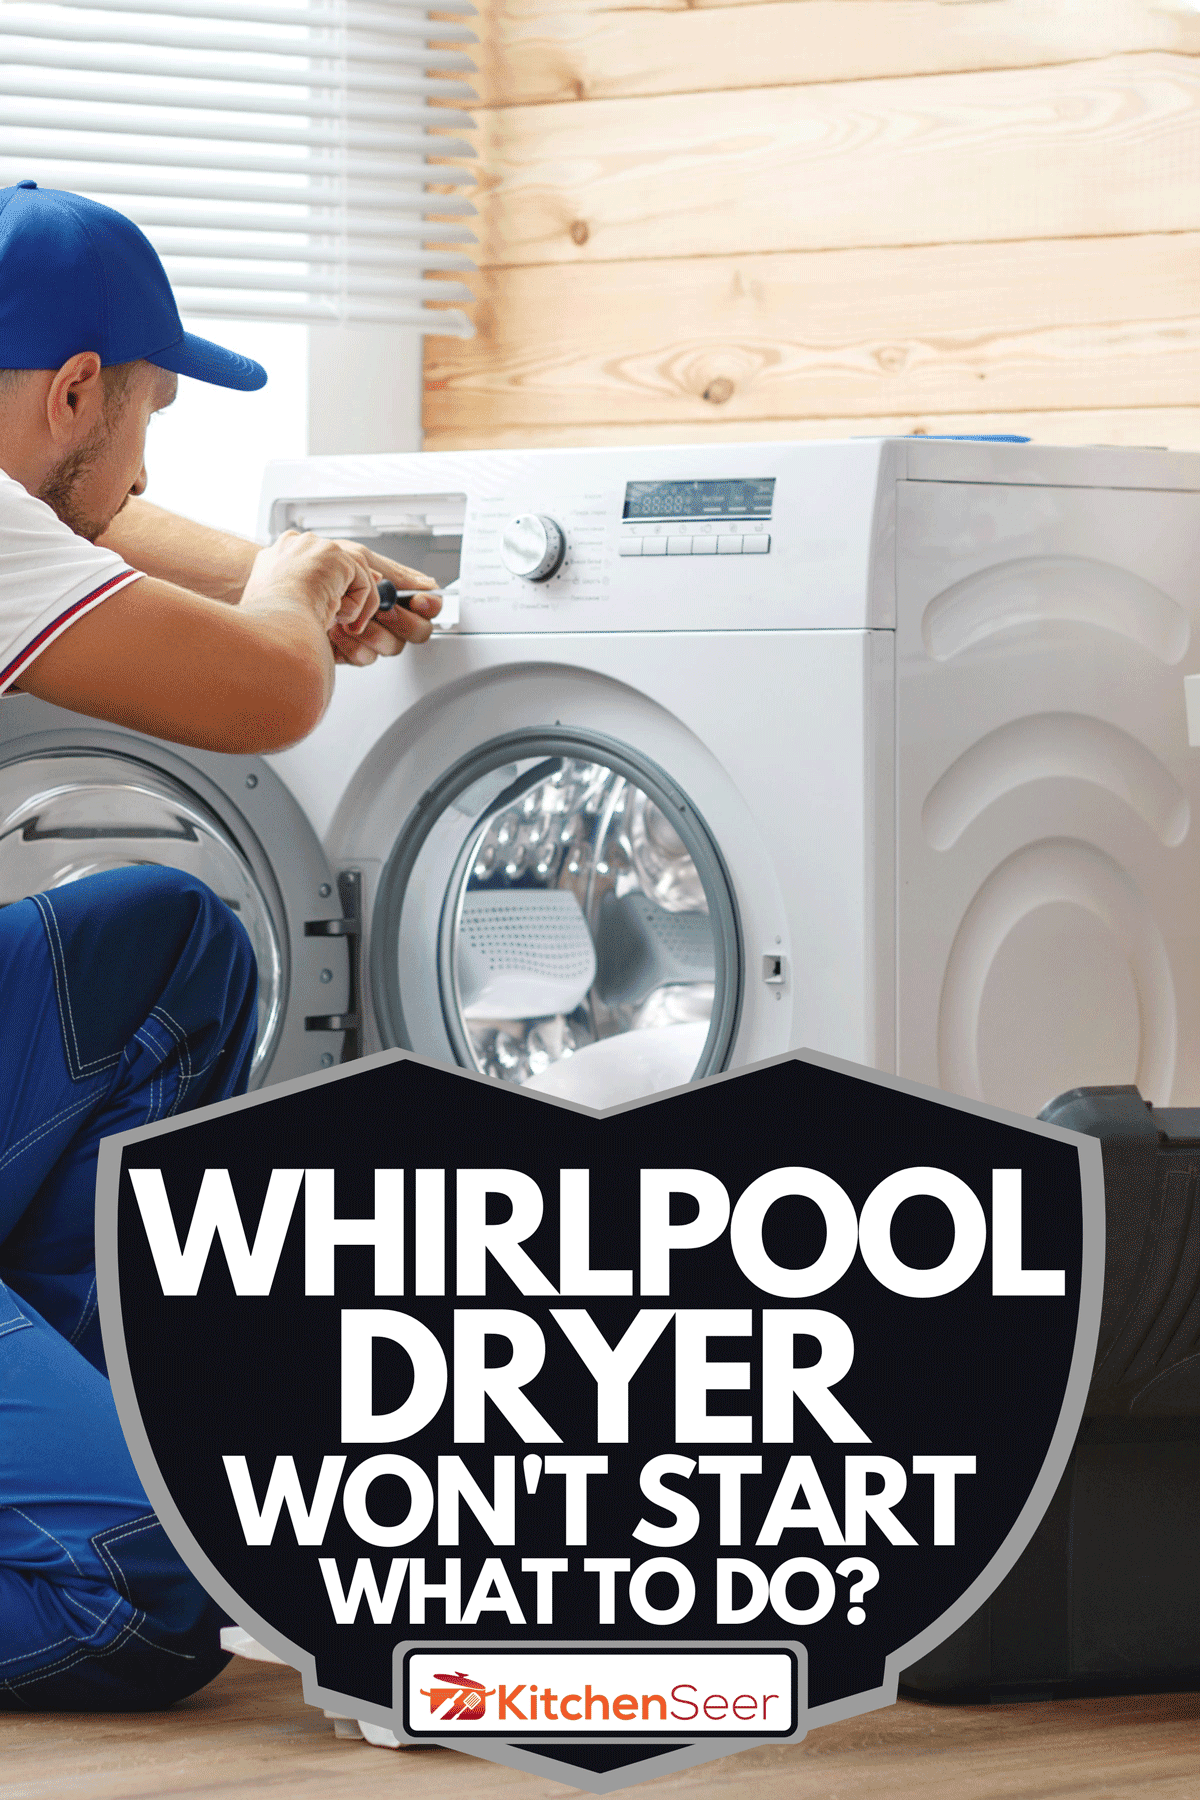 A man repairs a washing machine, Whirlpool Dryer Won't Start - What To Do?